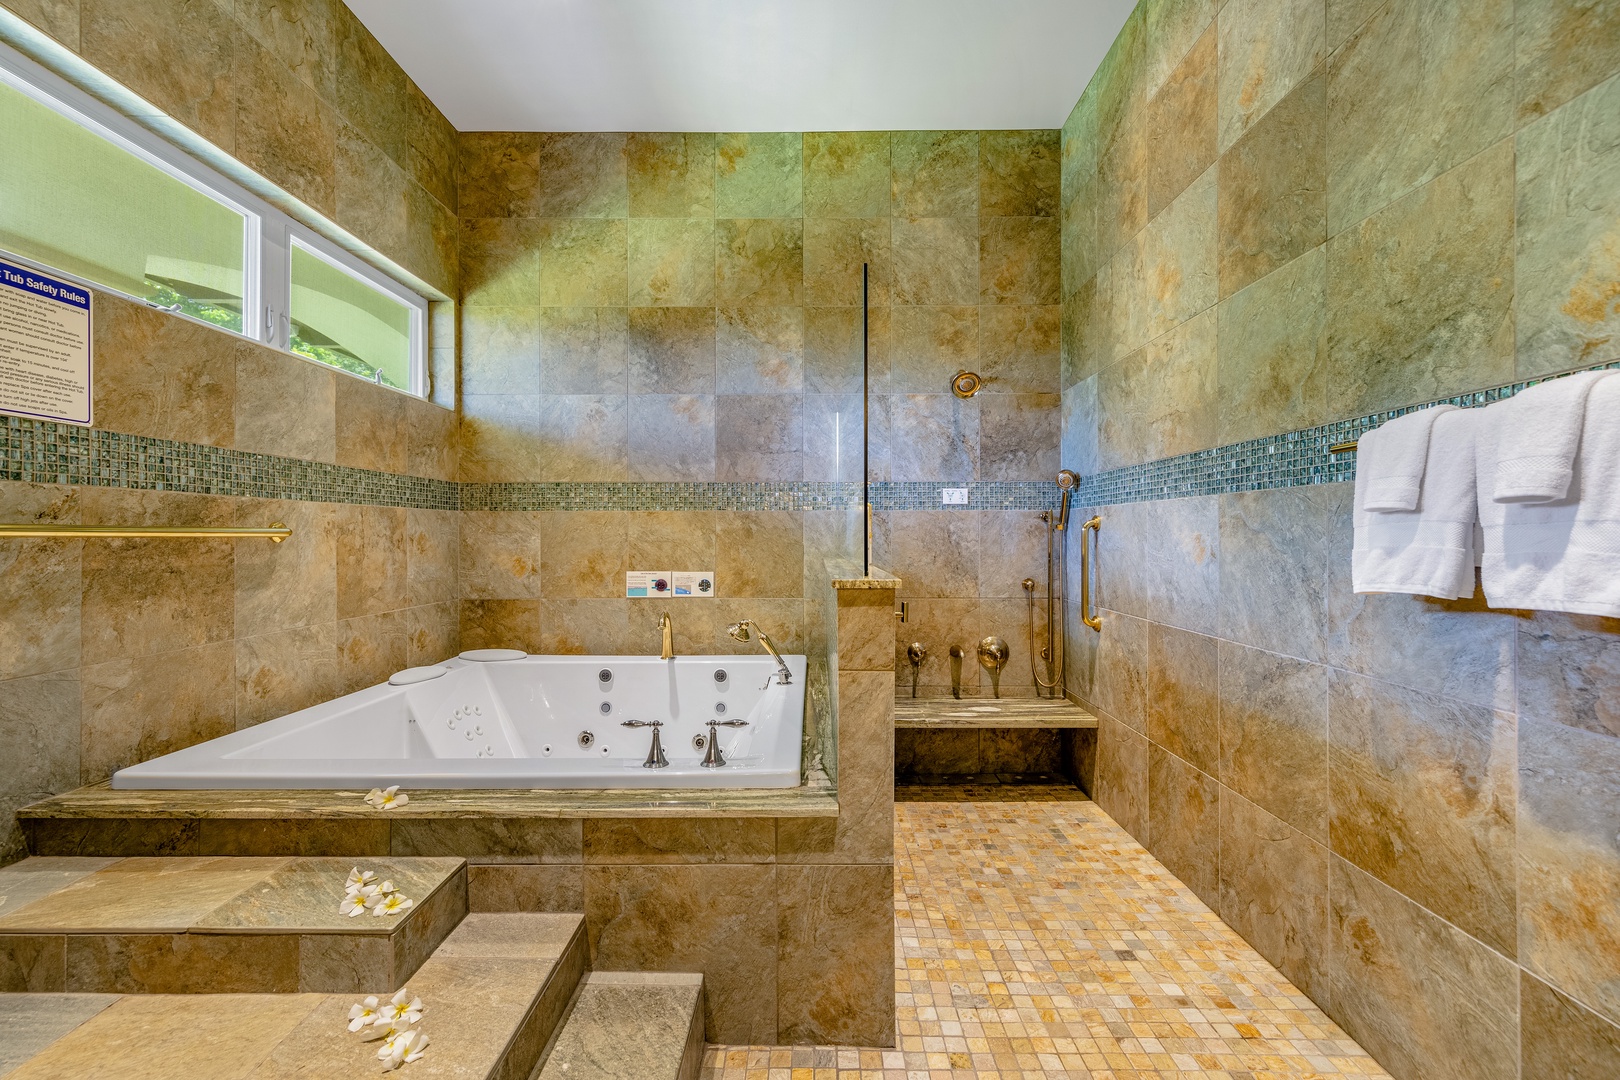 Kailua Kona Vacation Rentals, Kailua Kona Estate** - The primary en-suite bathroom with deep soaking tub and walk-in shower.